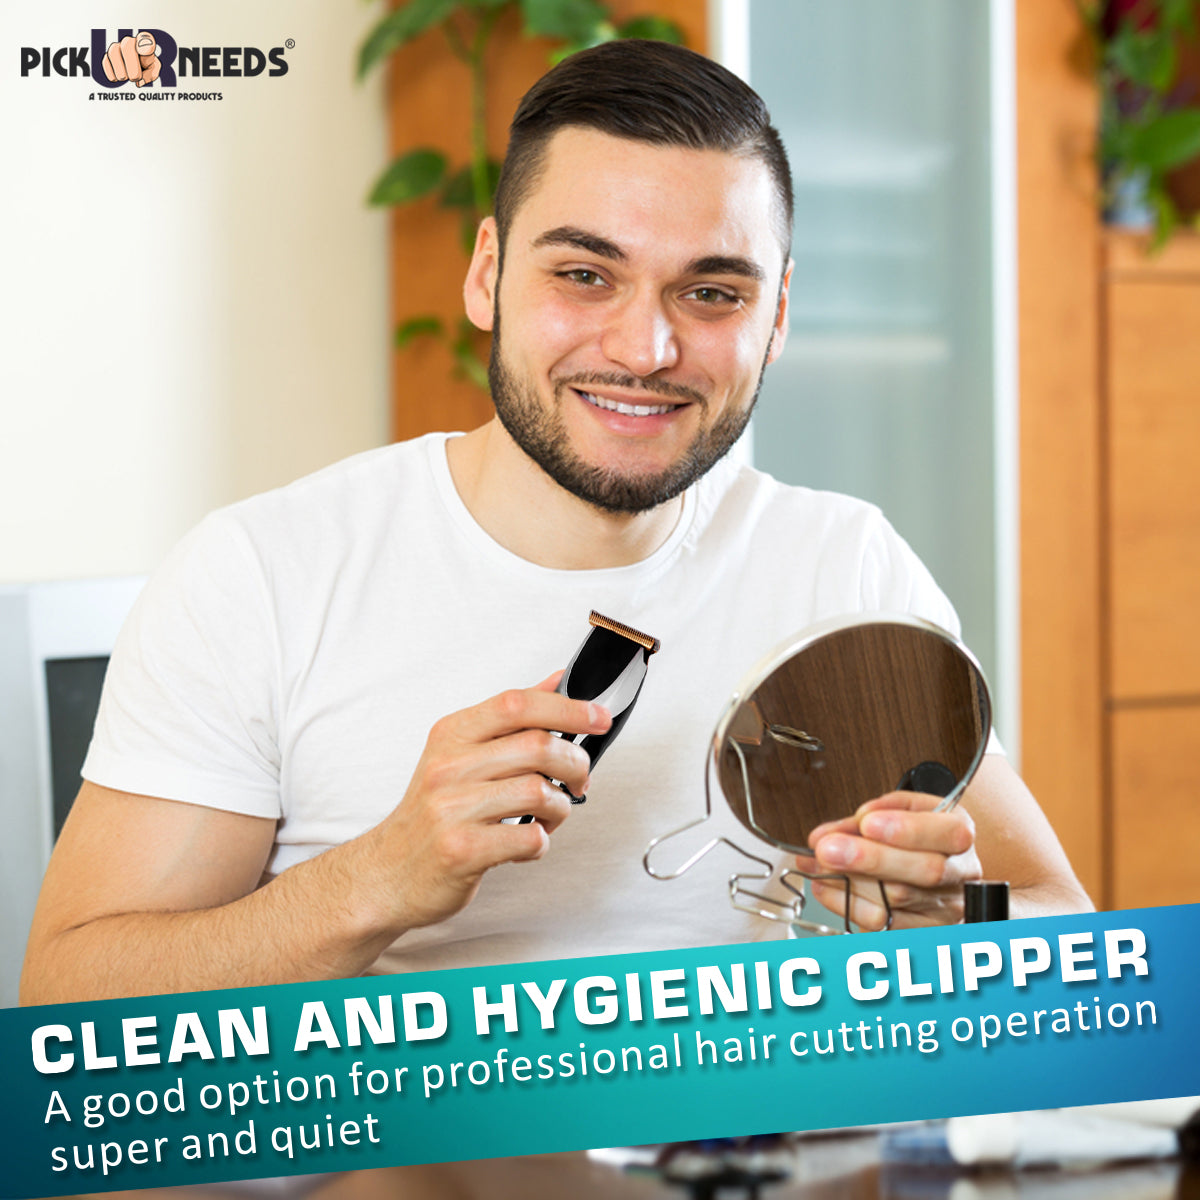 Pick Ur Needs Professional Hair Clipper Advanced shaving System Runtime: 120 min Trimmer for Men